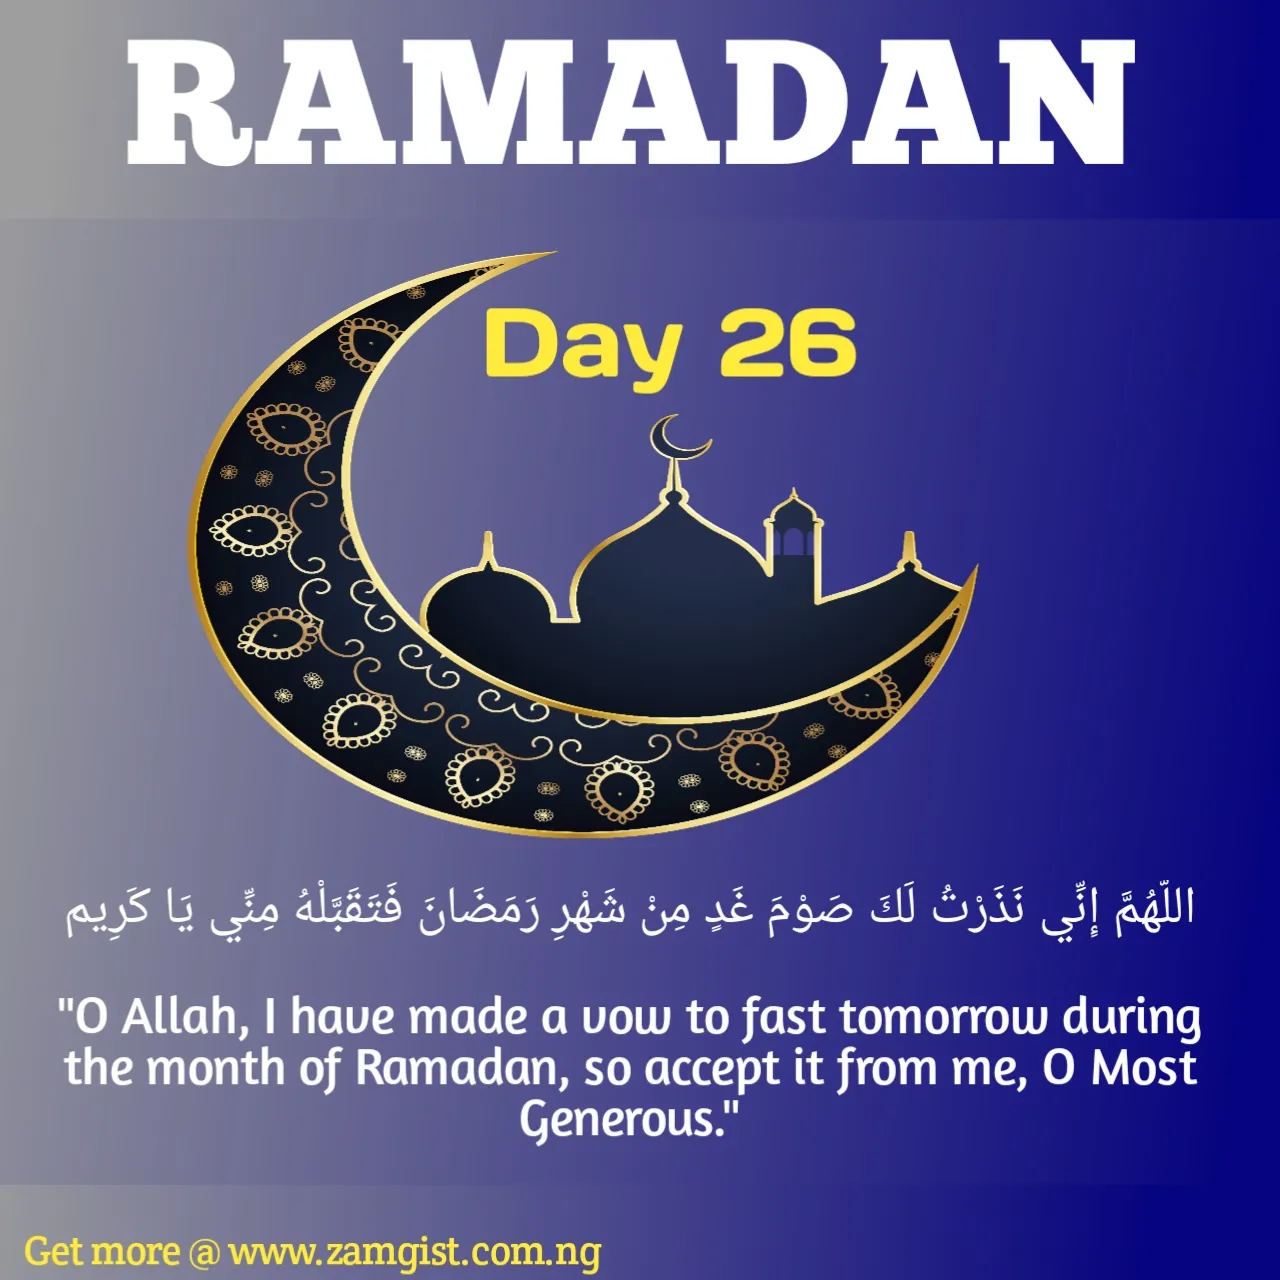 Ramadan day 26 image